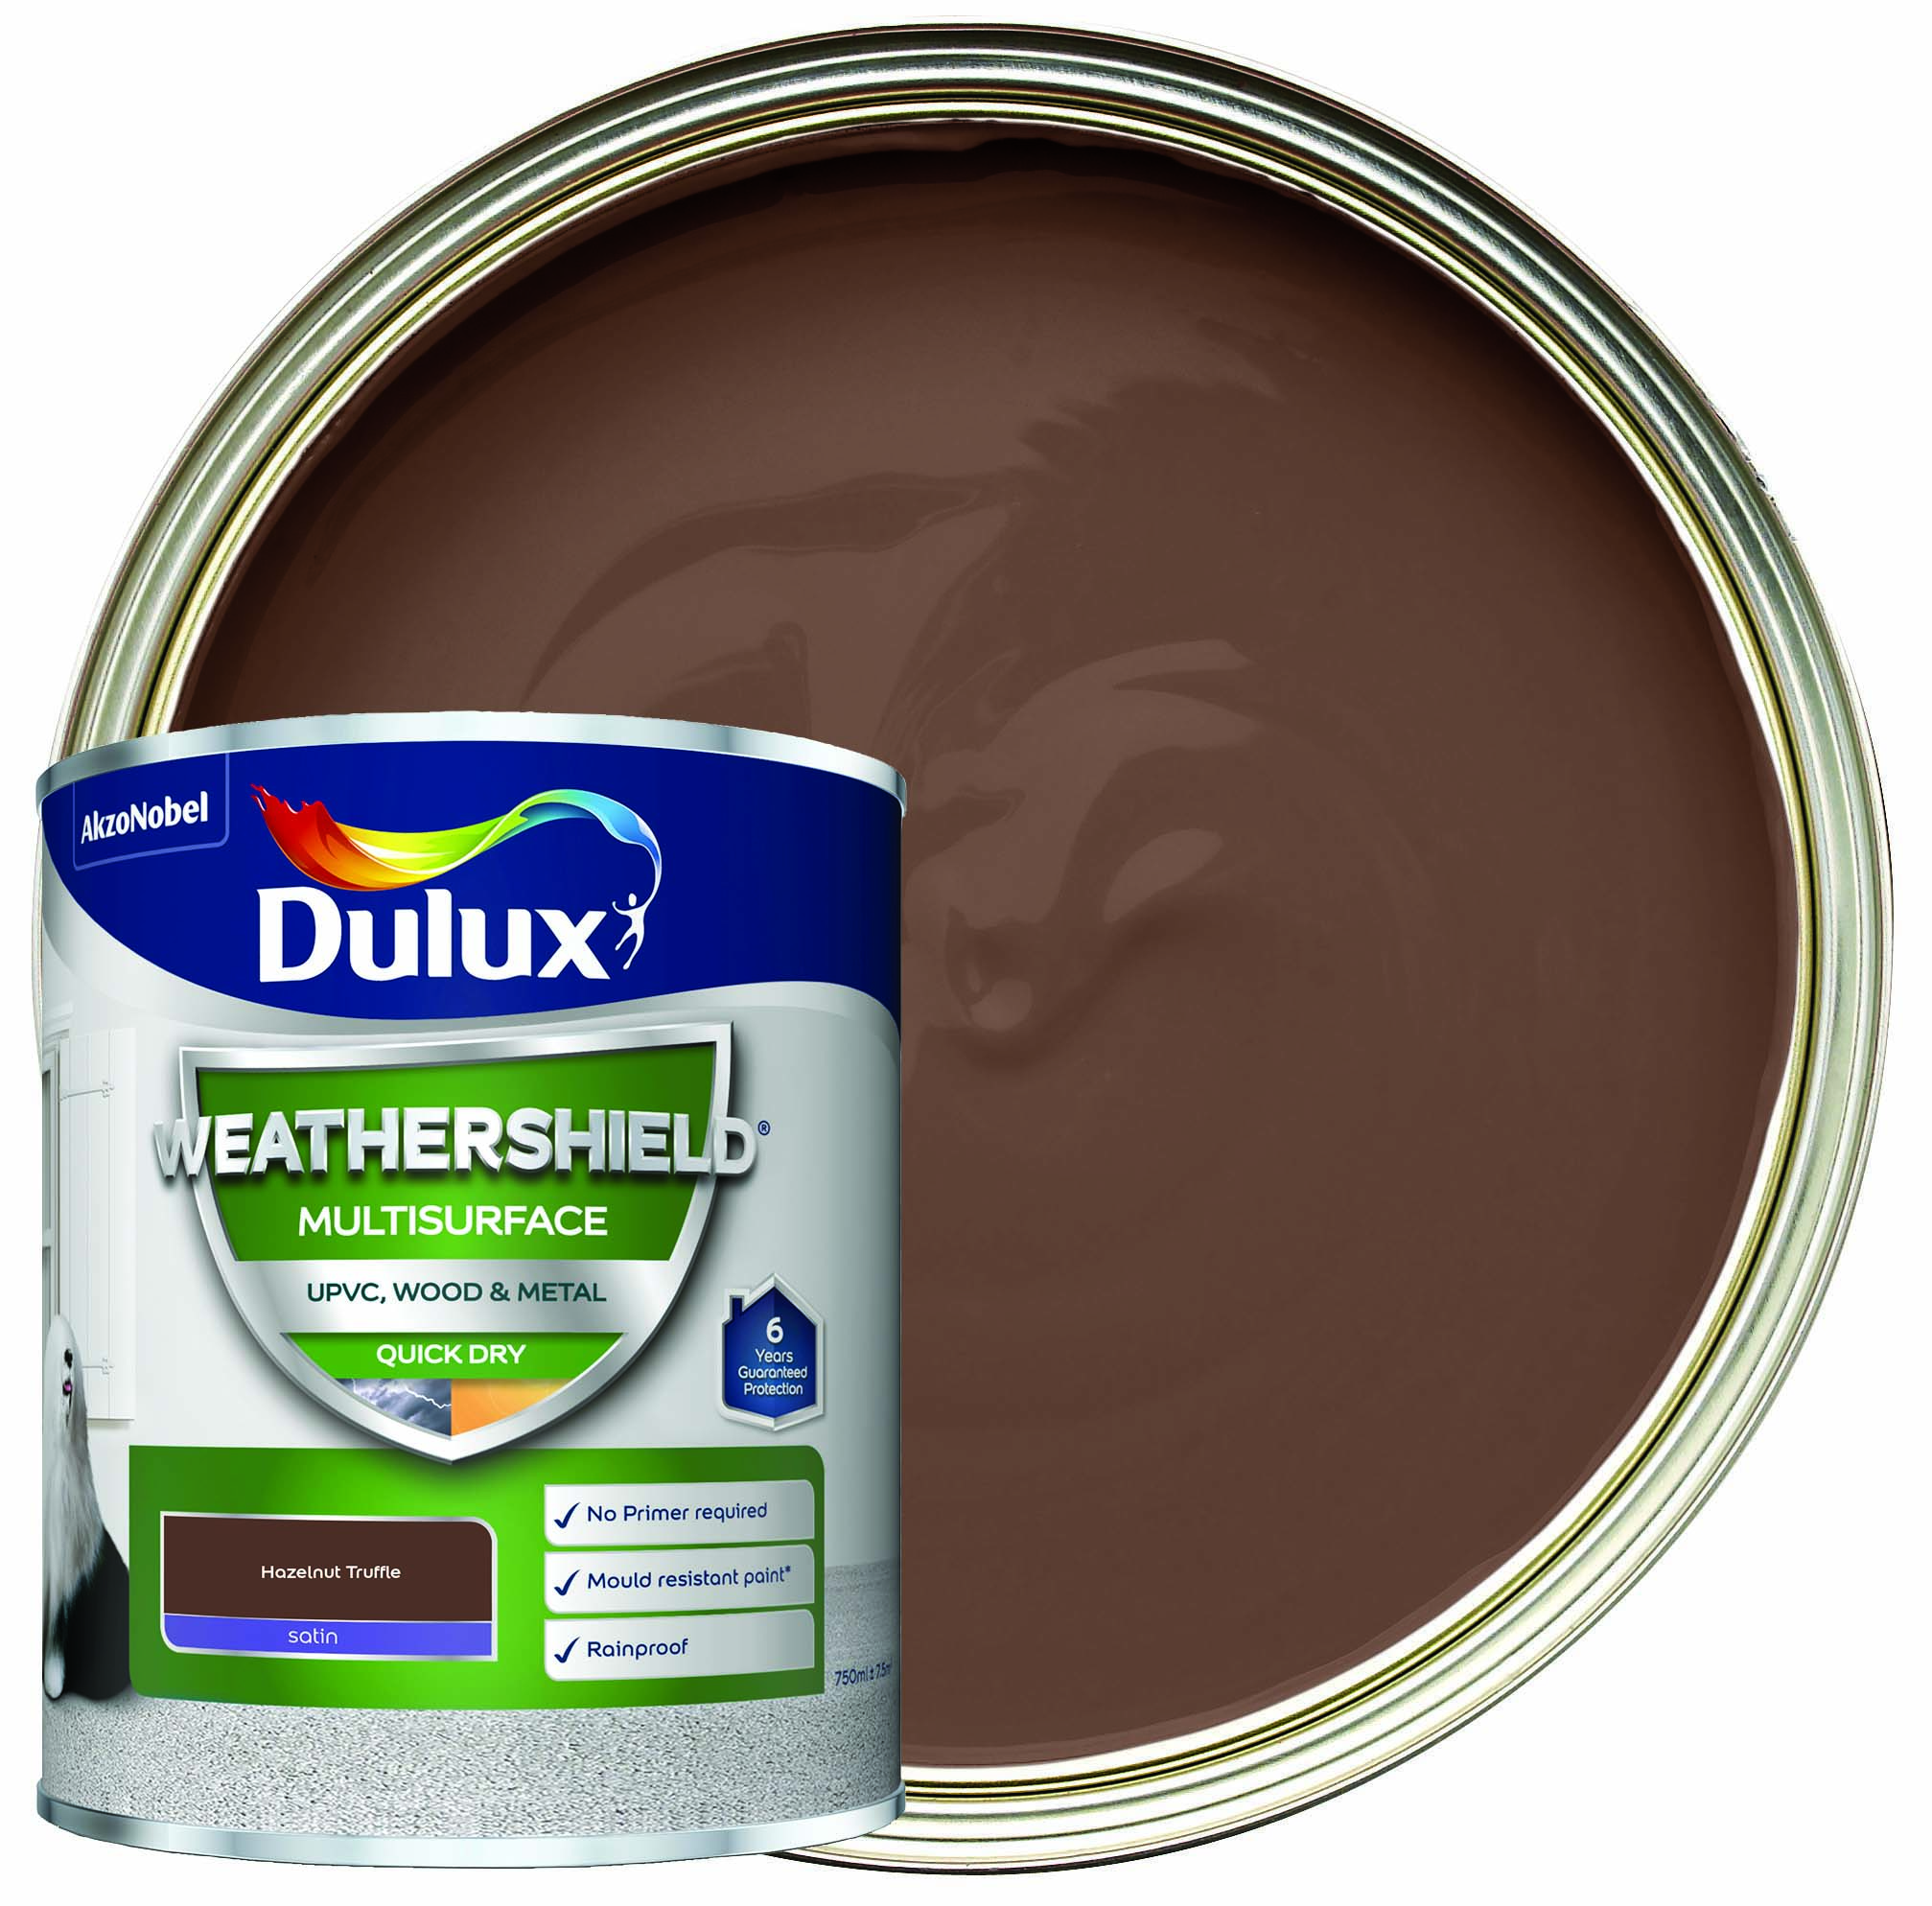 Image of Dulux Weathershield Multi-Surface Paint - Hazelnut Truffle - 750ml